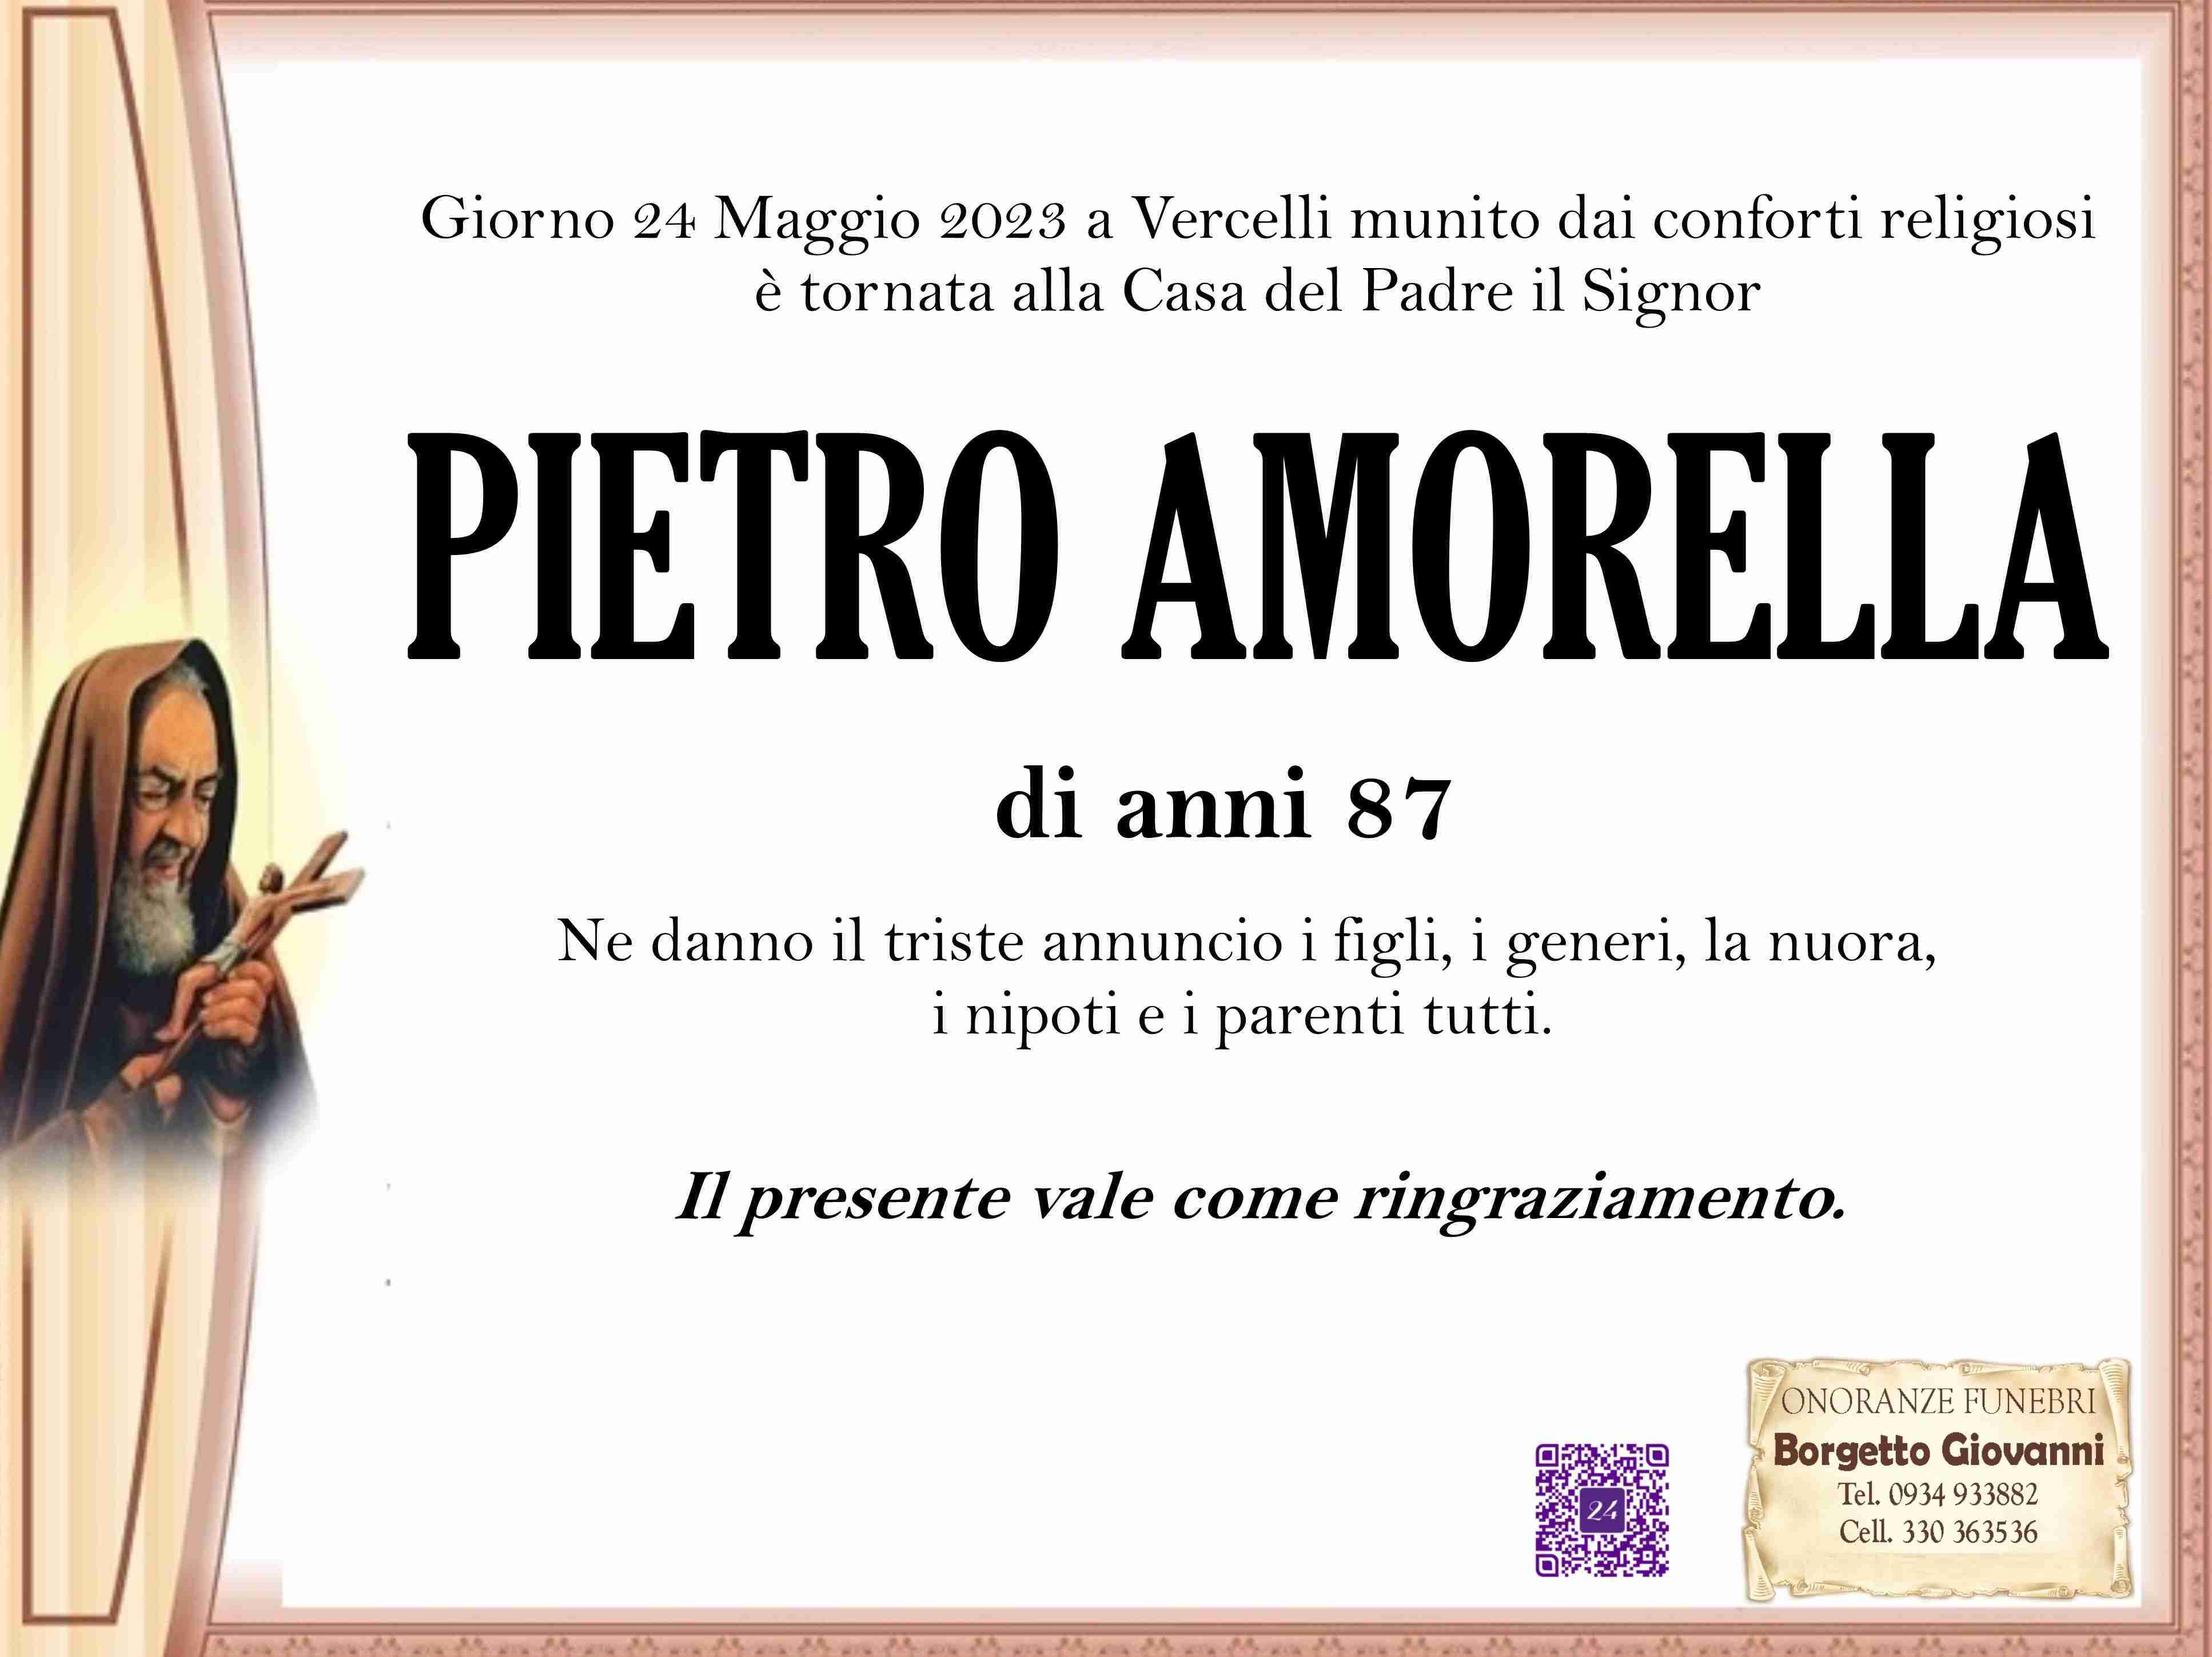 Pietro Amorella